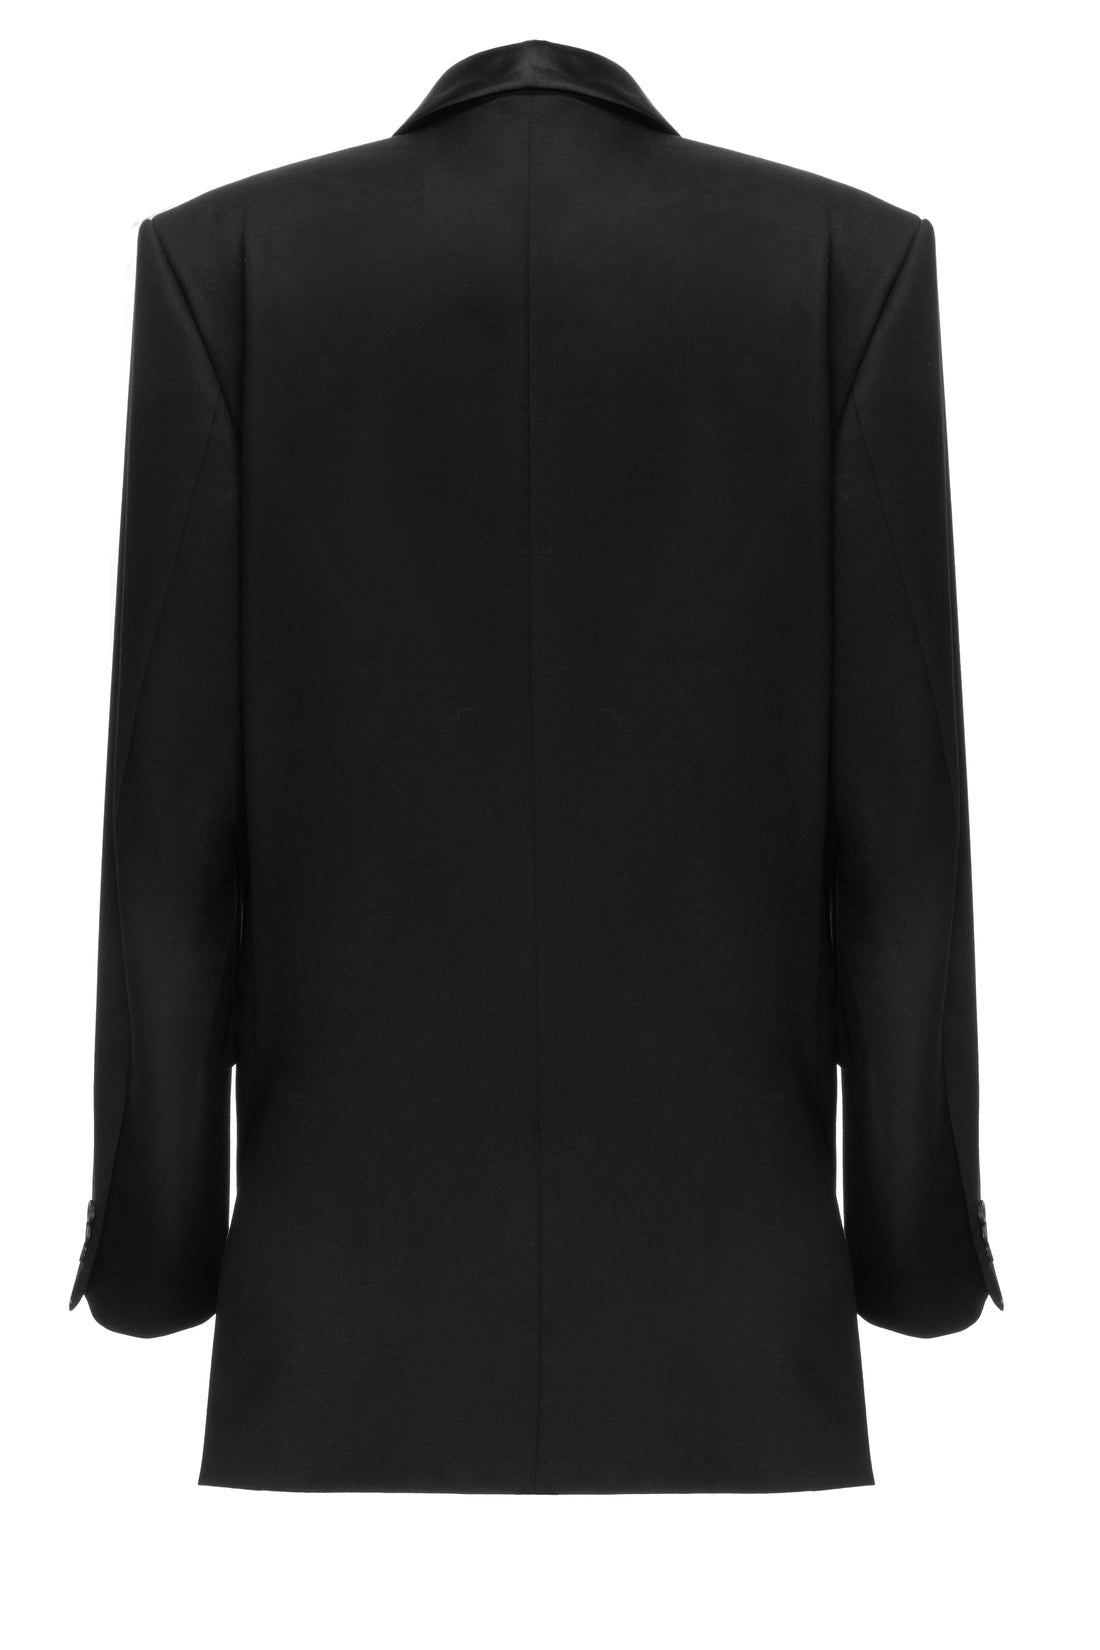 SITUATIONIST Black Asymmetrical Jacket